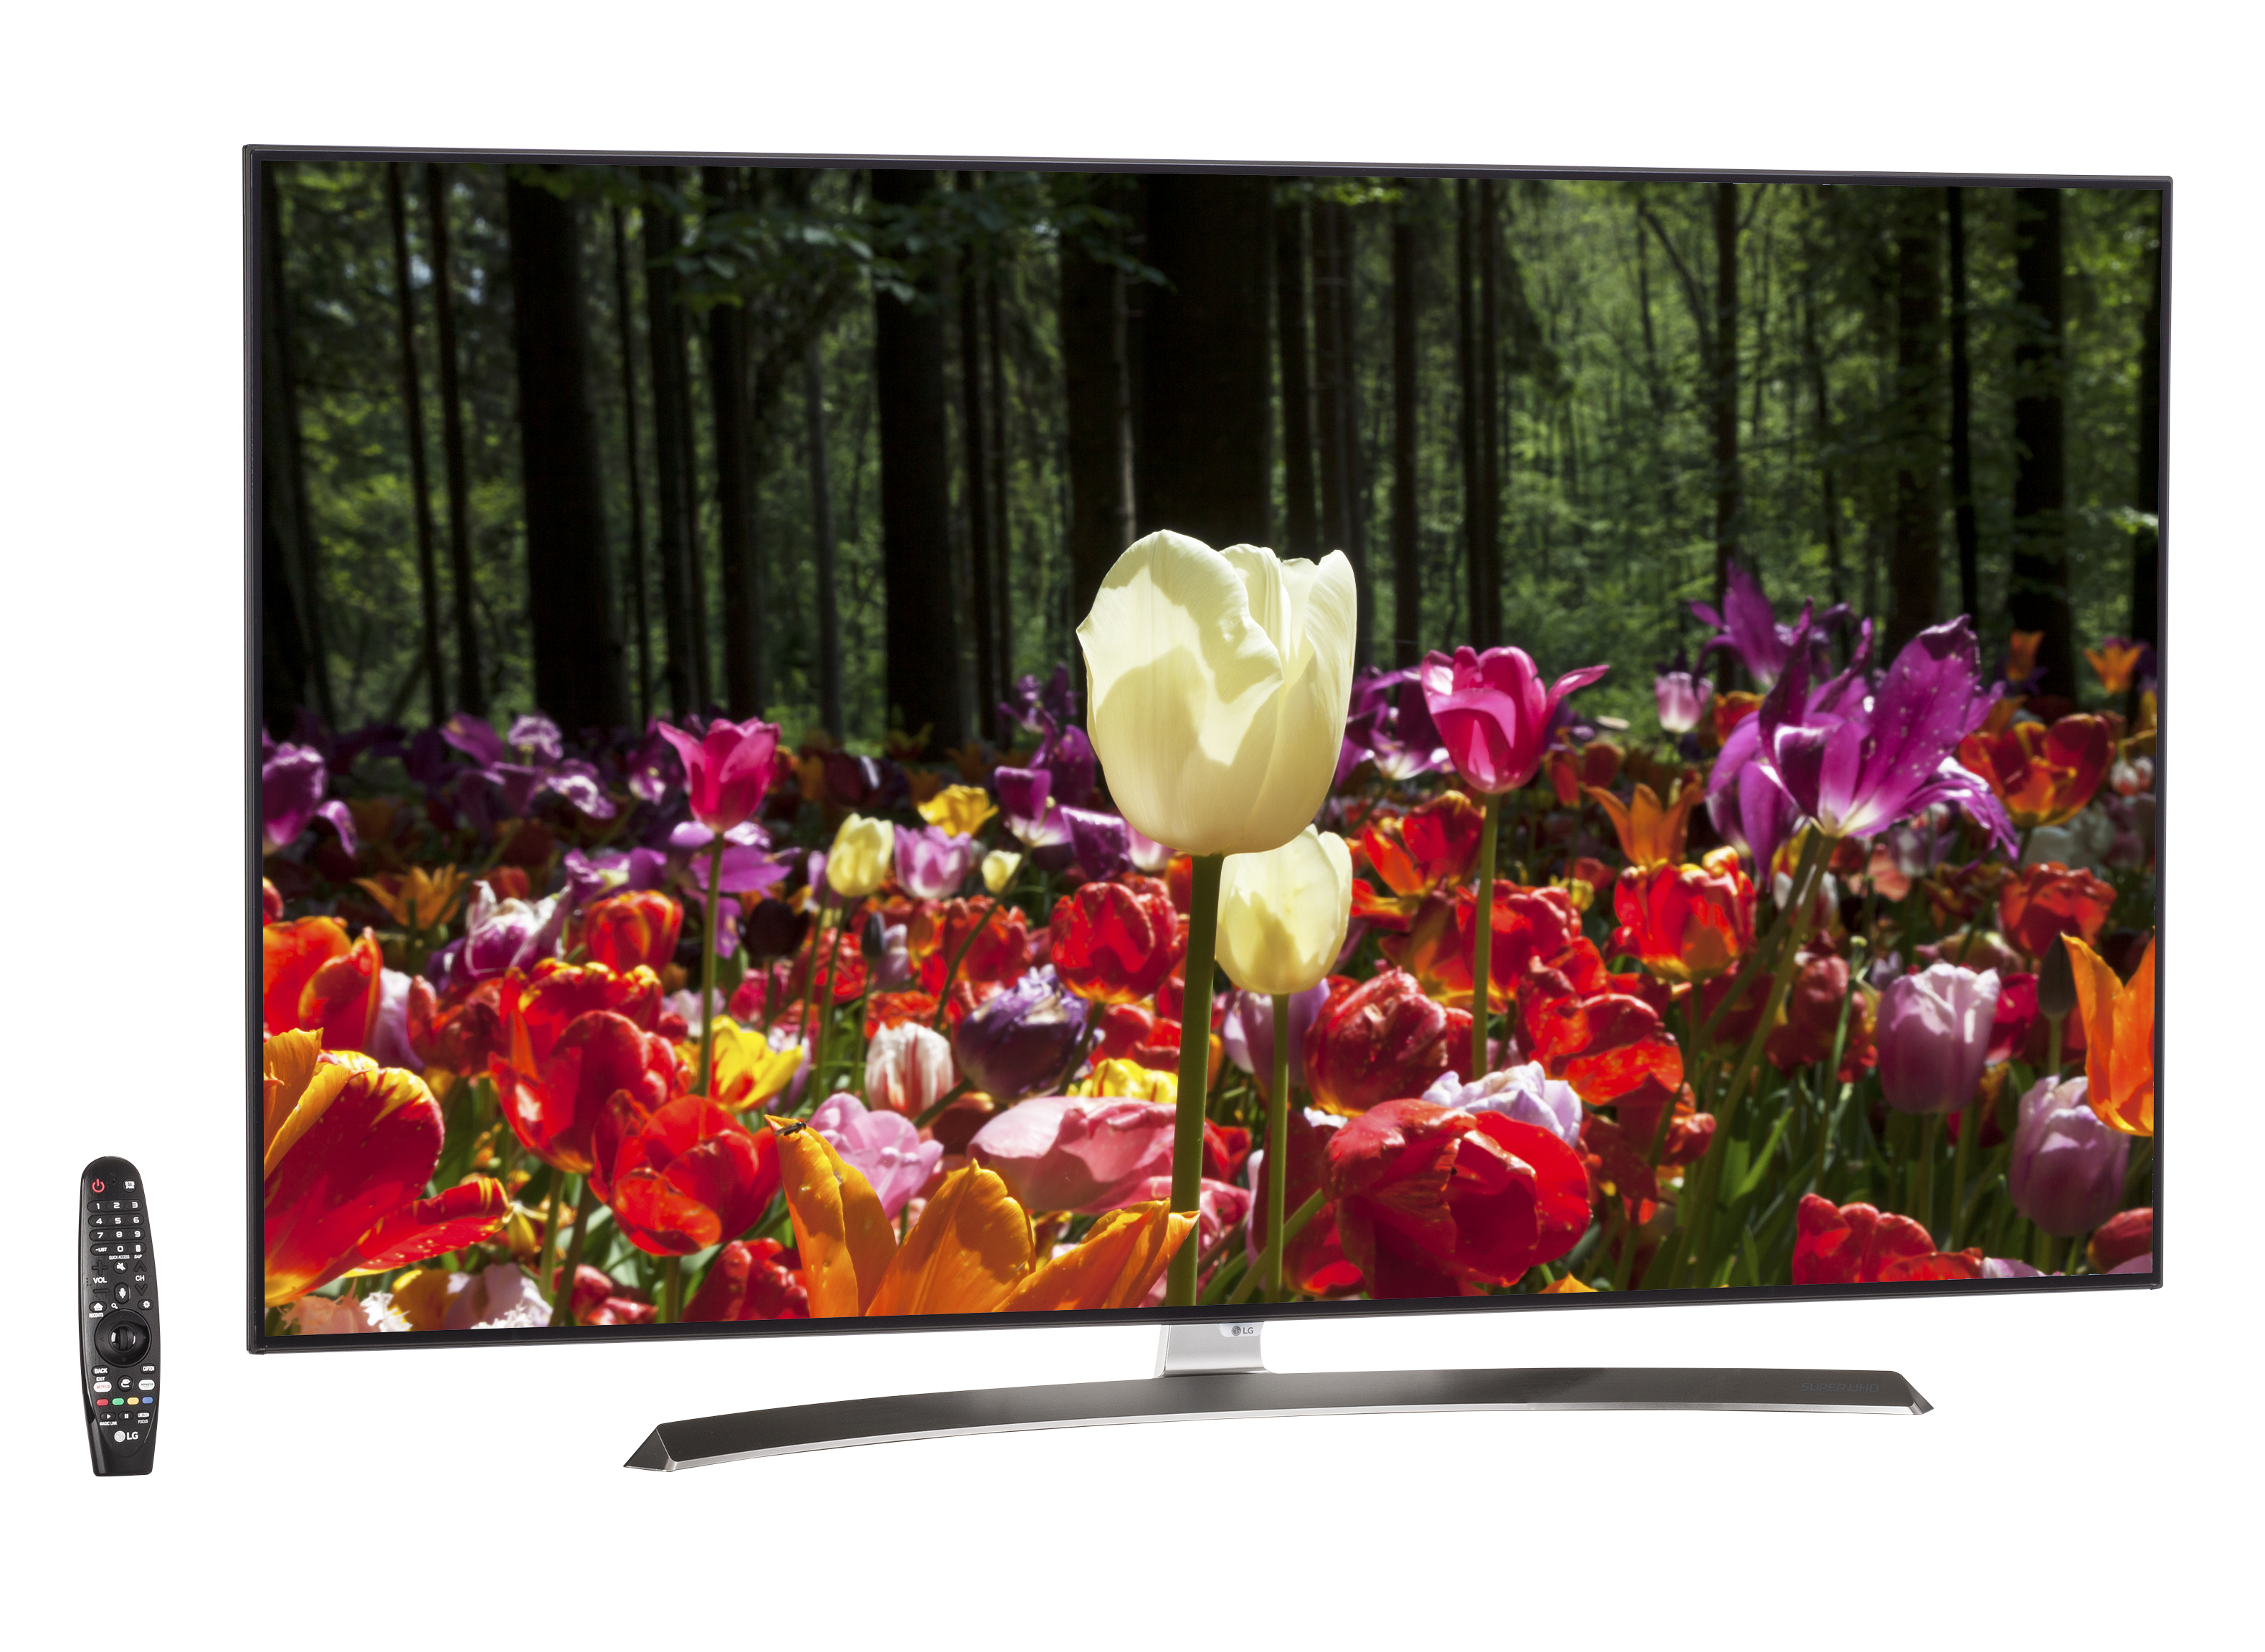 LG 55SJ8500 TV Review - Consumer Reports